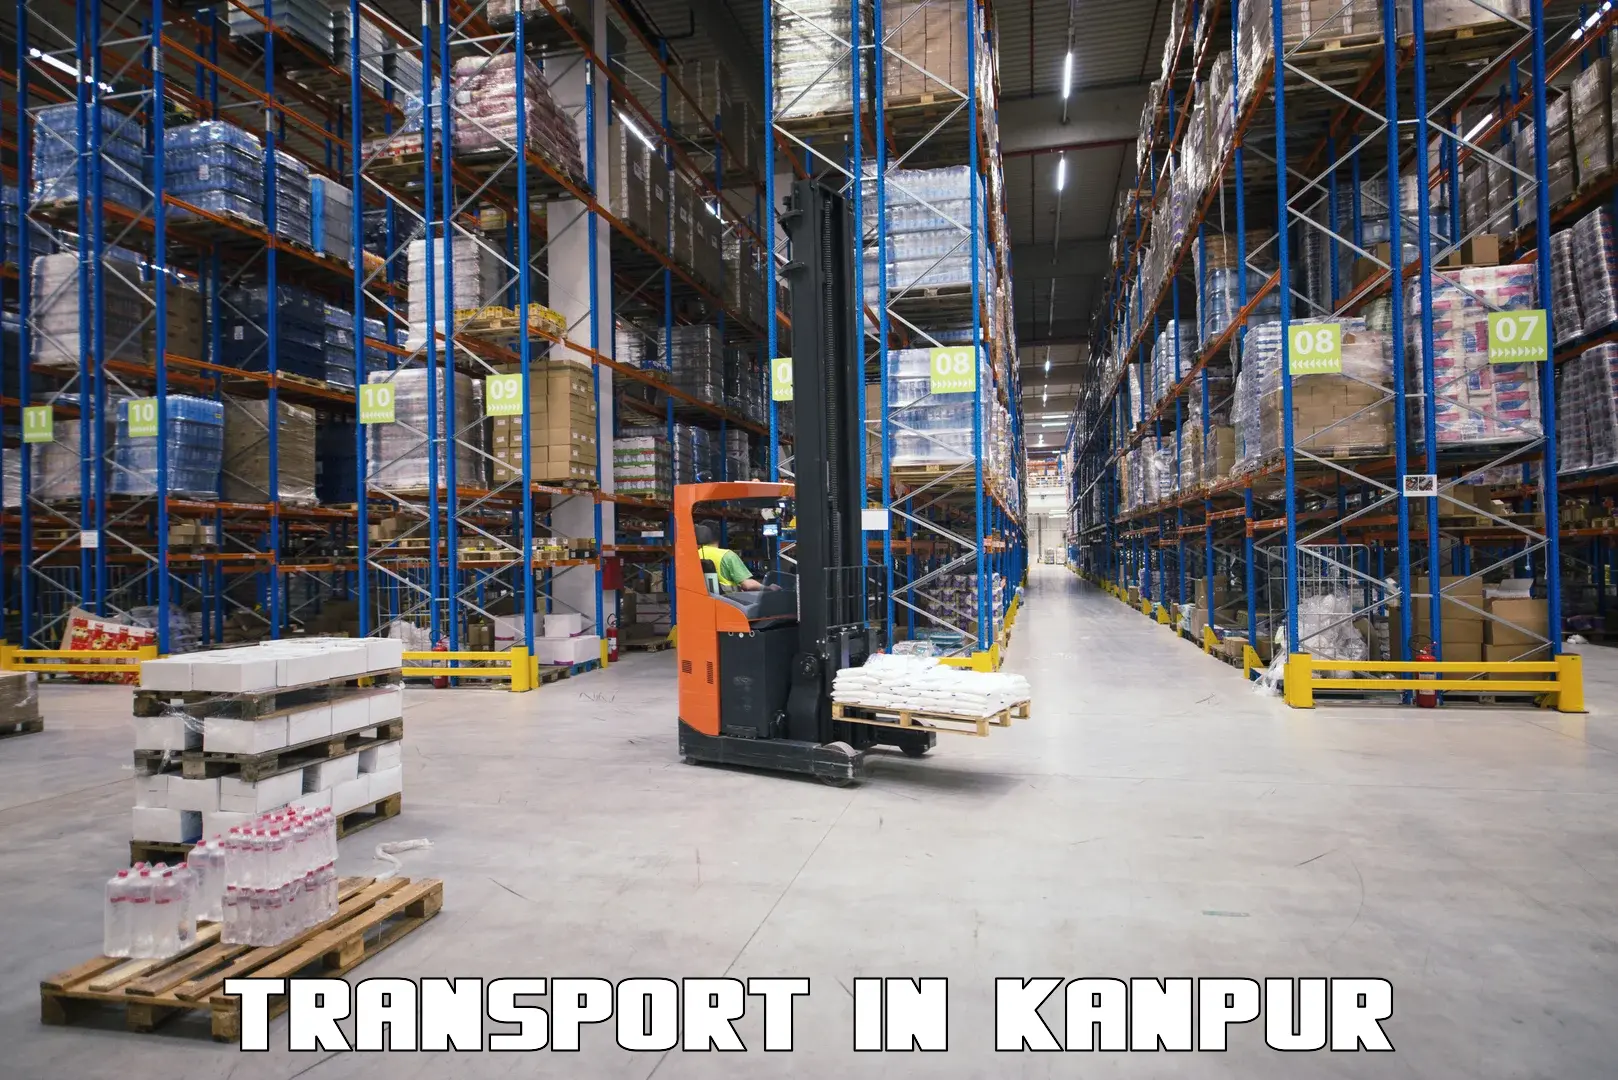 Intercity transport in Kanpur